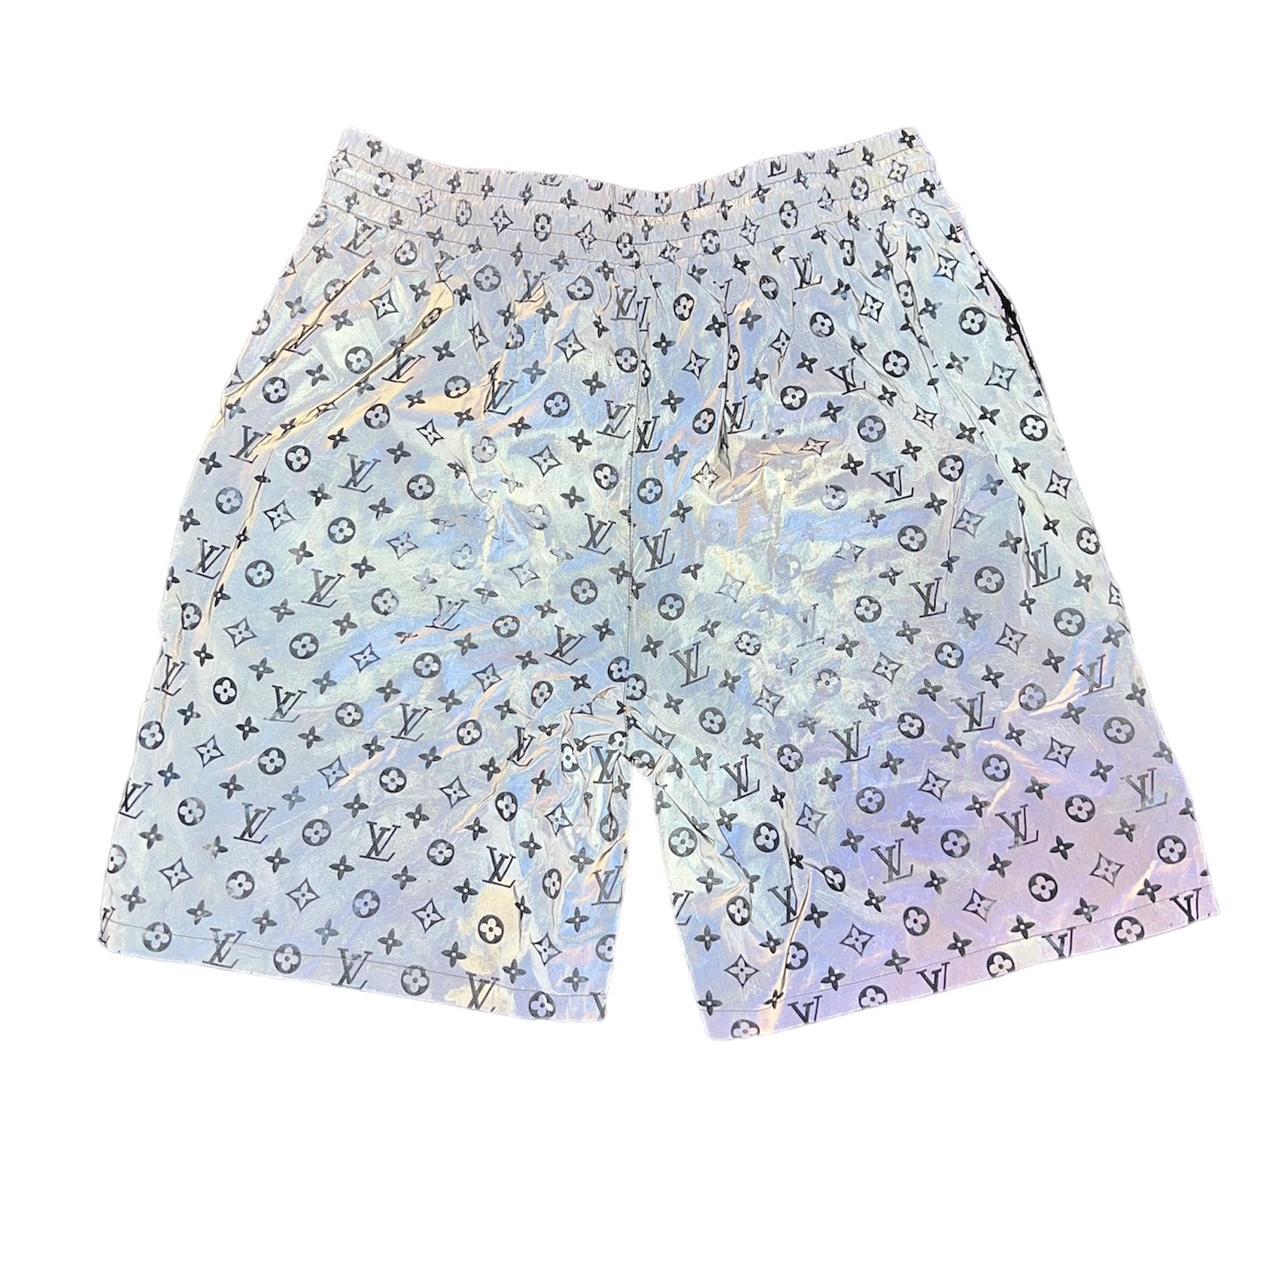 LV reflective swim shorts - Depop